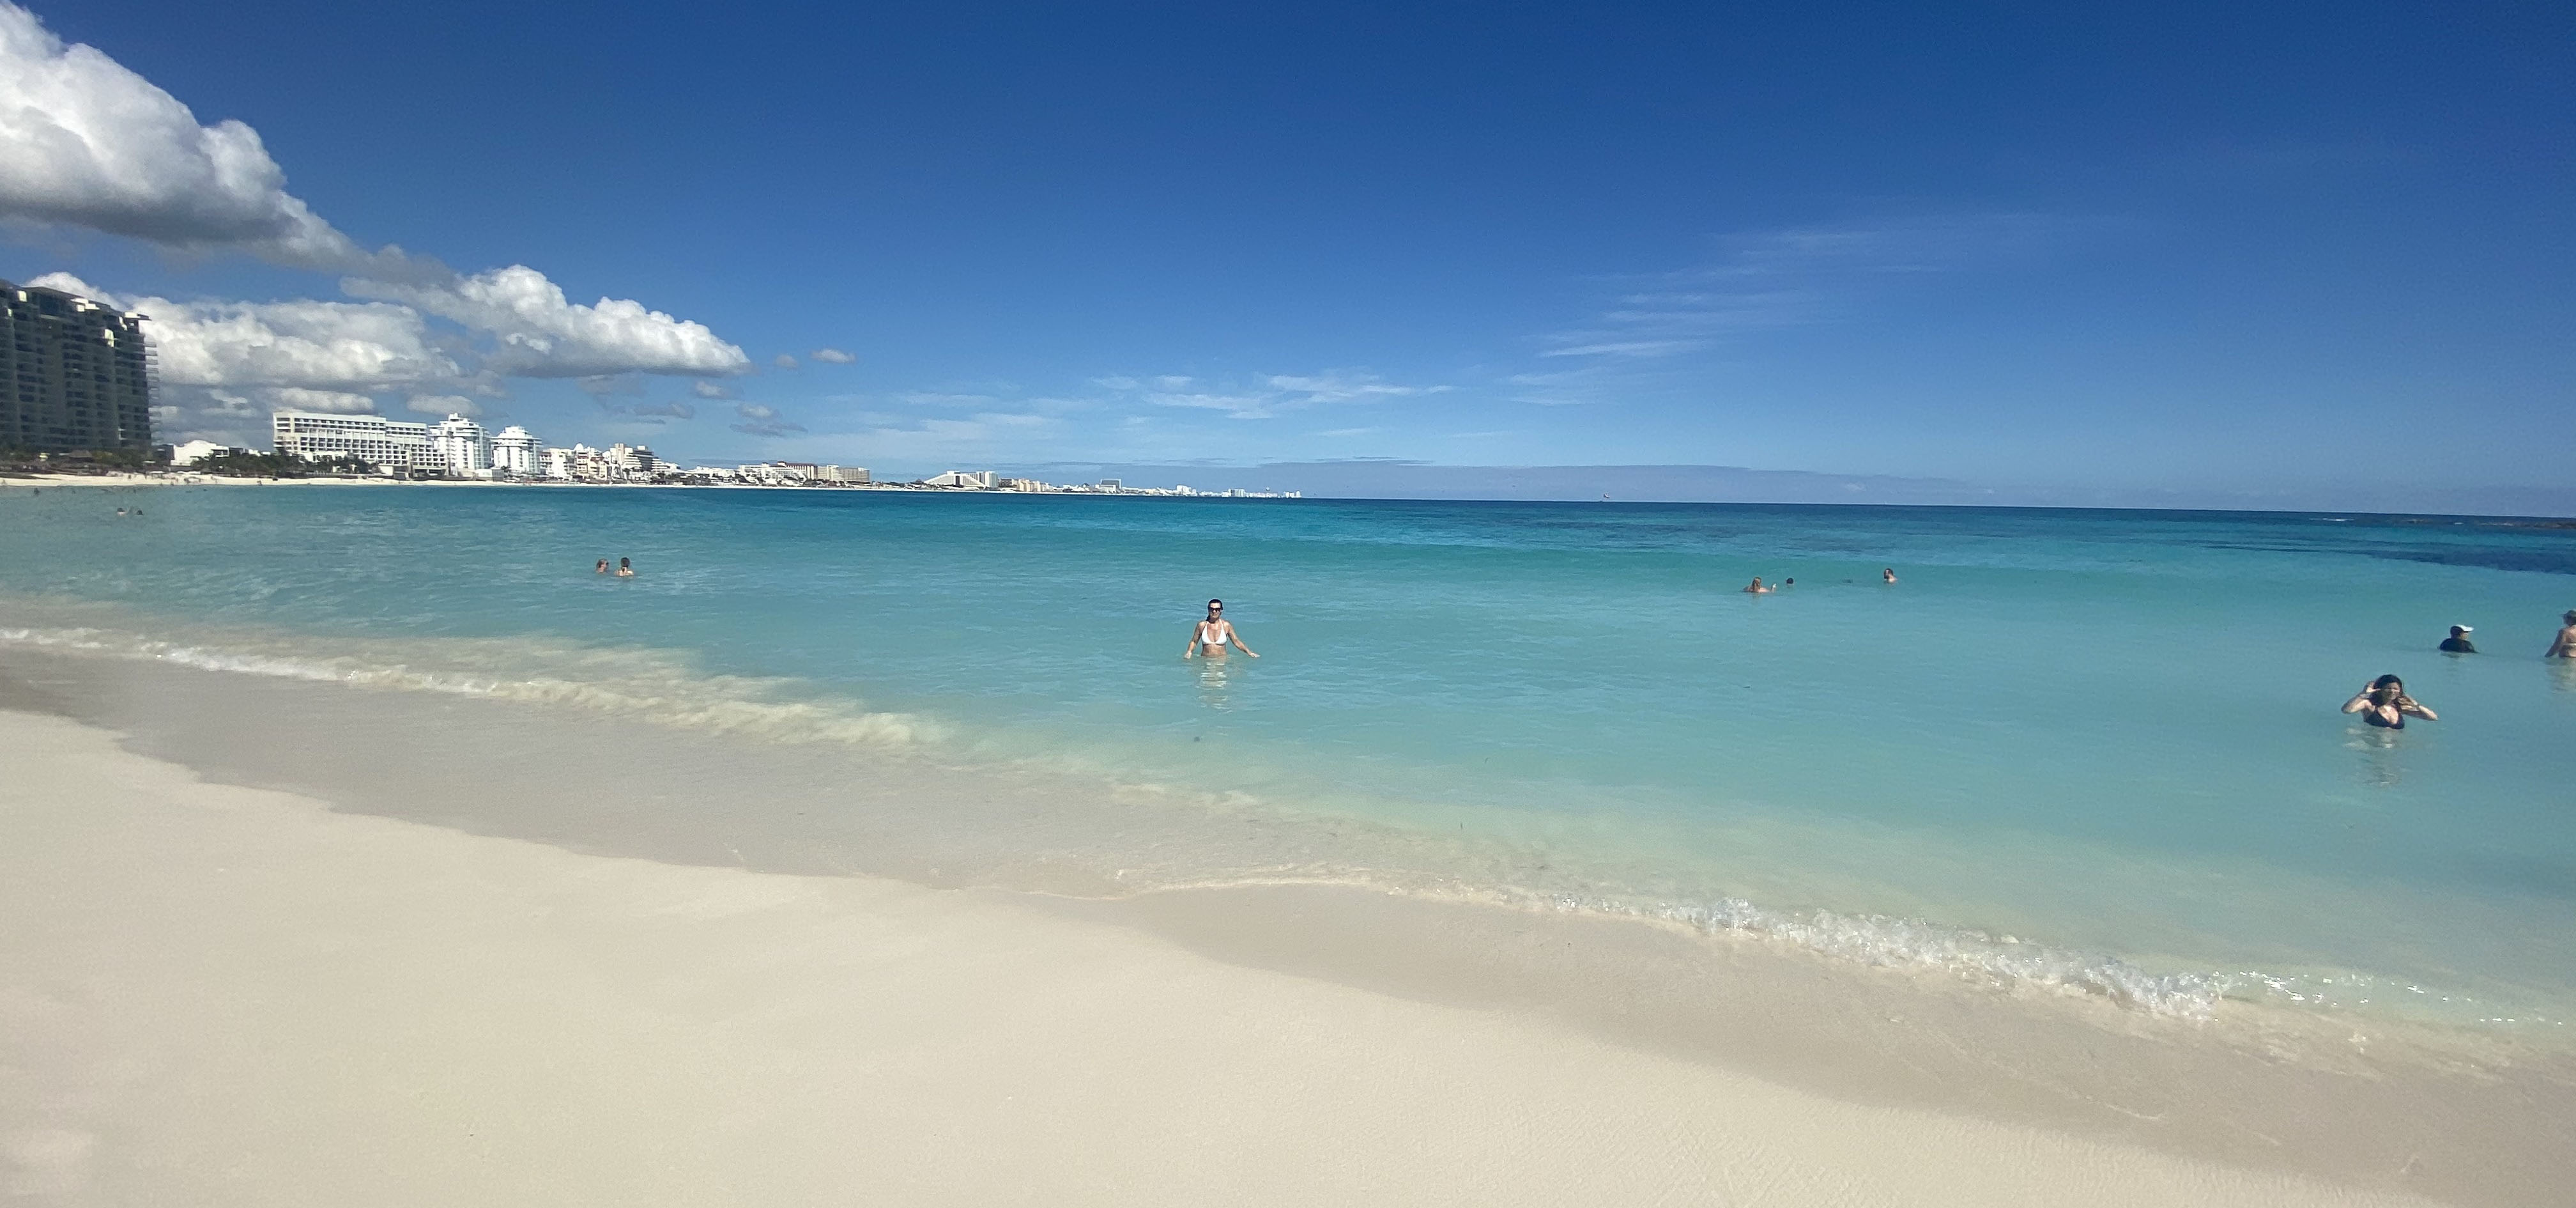 An image of Cancun beach in Zona Hotelera